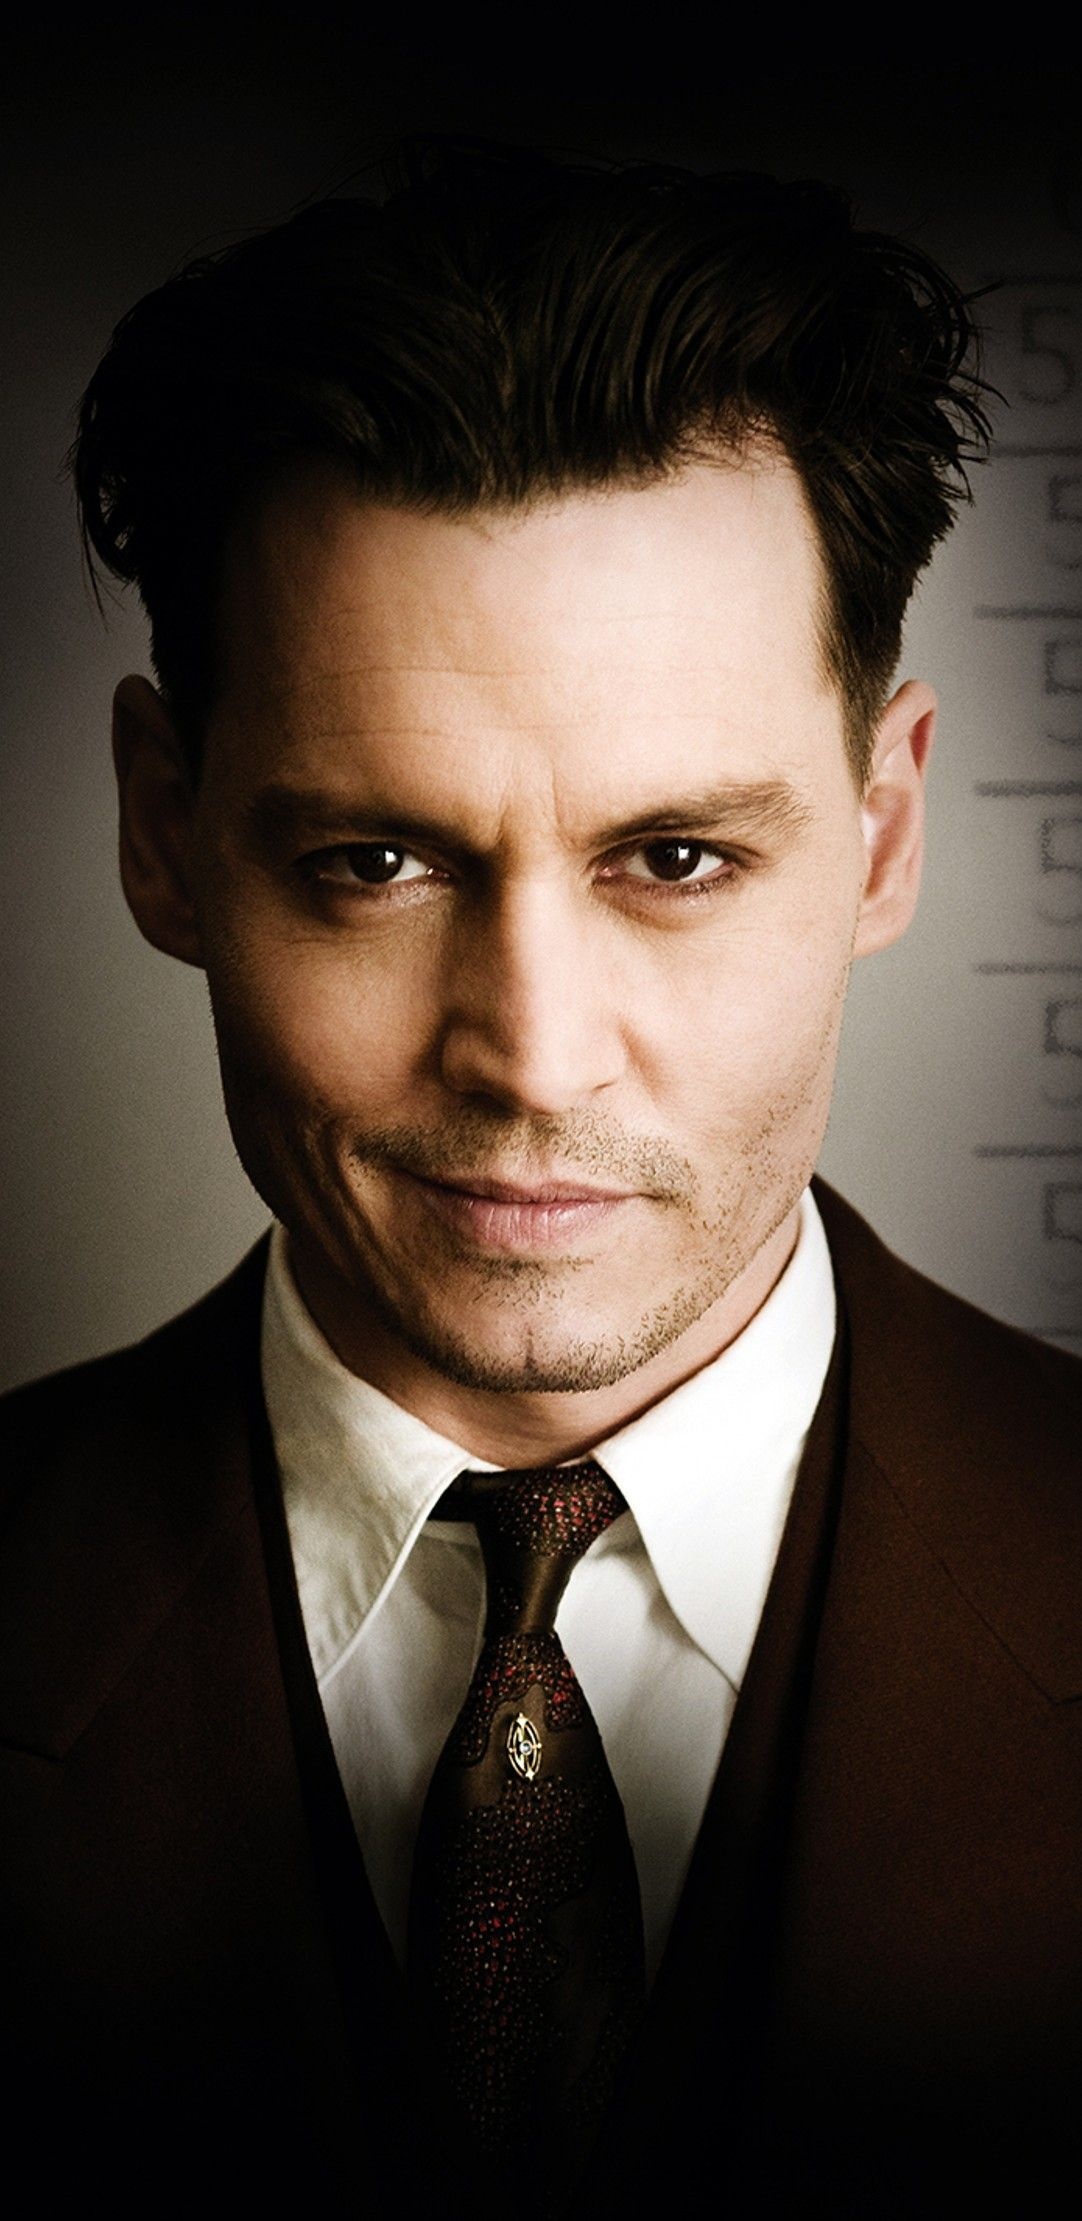 Public Enemies, Johnny Depp as Dillinger, Crime thriller, Intense wallpaper, 1090x2230 HD Handy